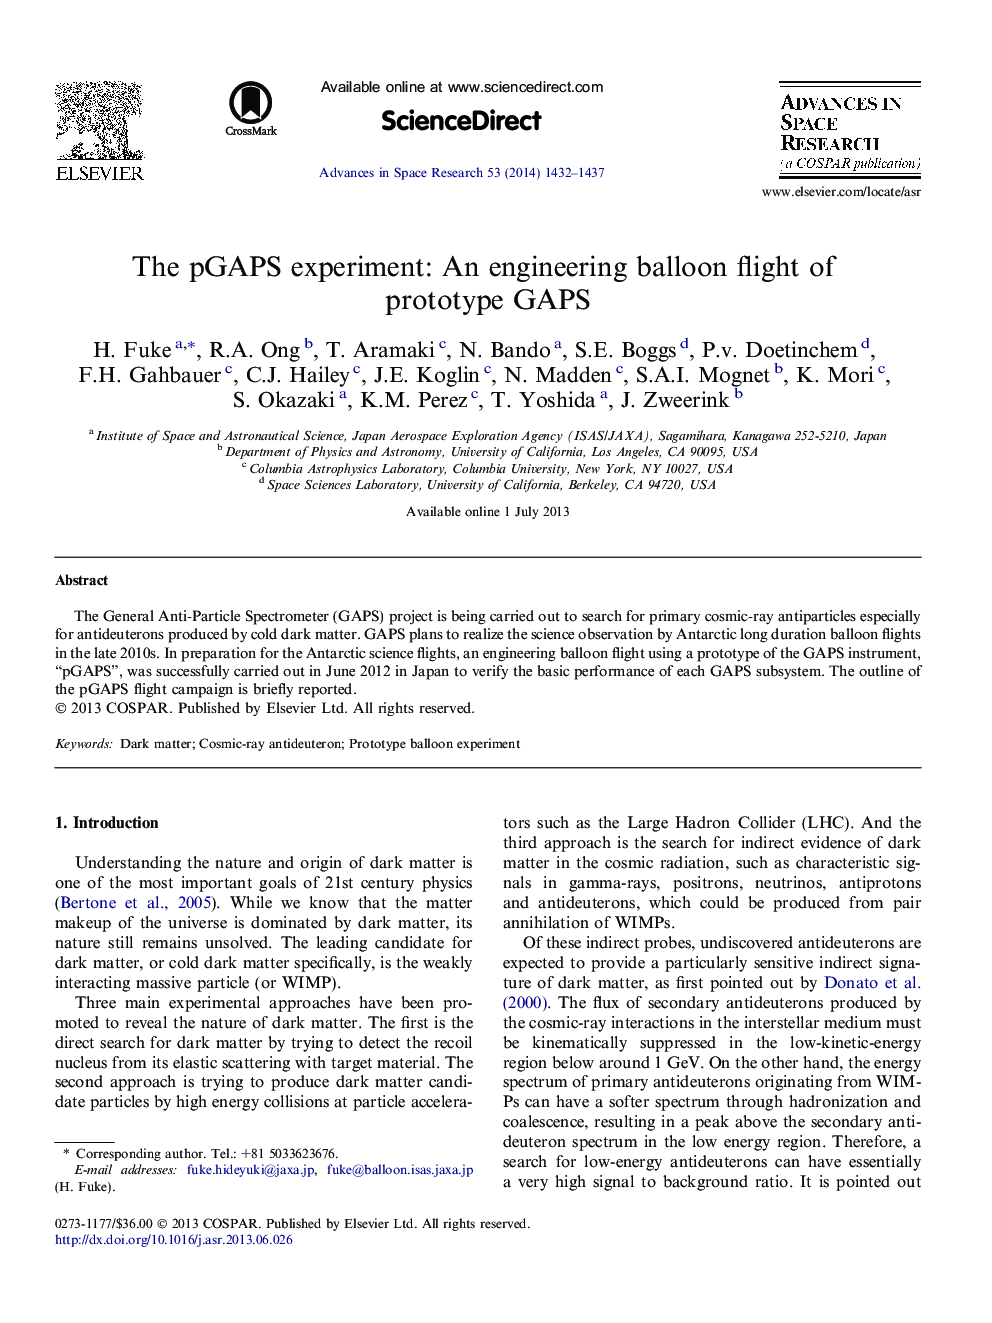 The pGAPS experiment: An engineering balloon flight of prototype GAPS